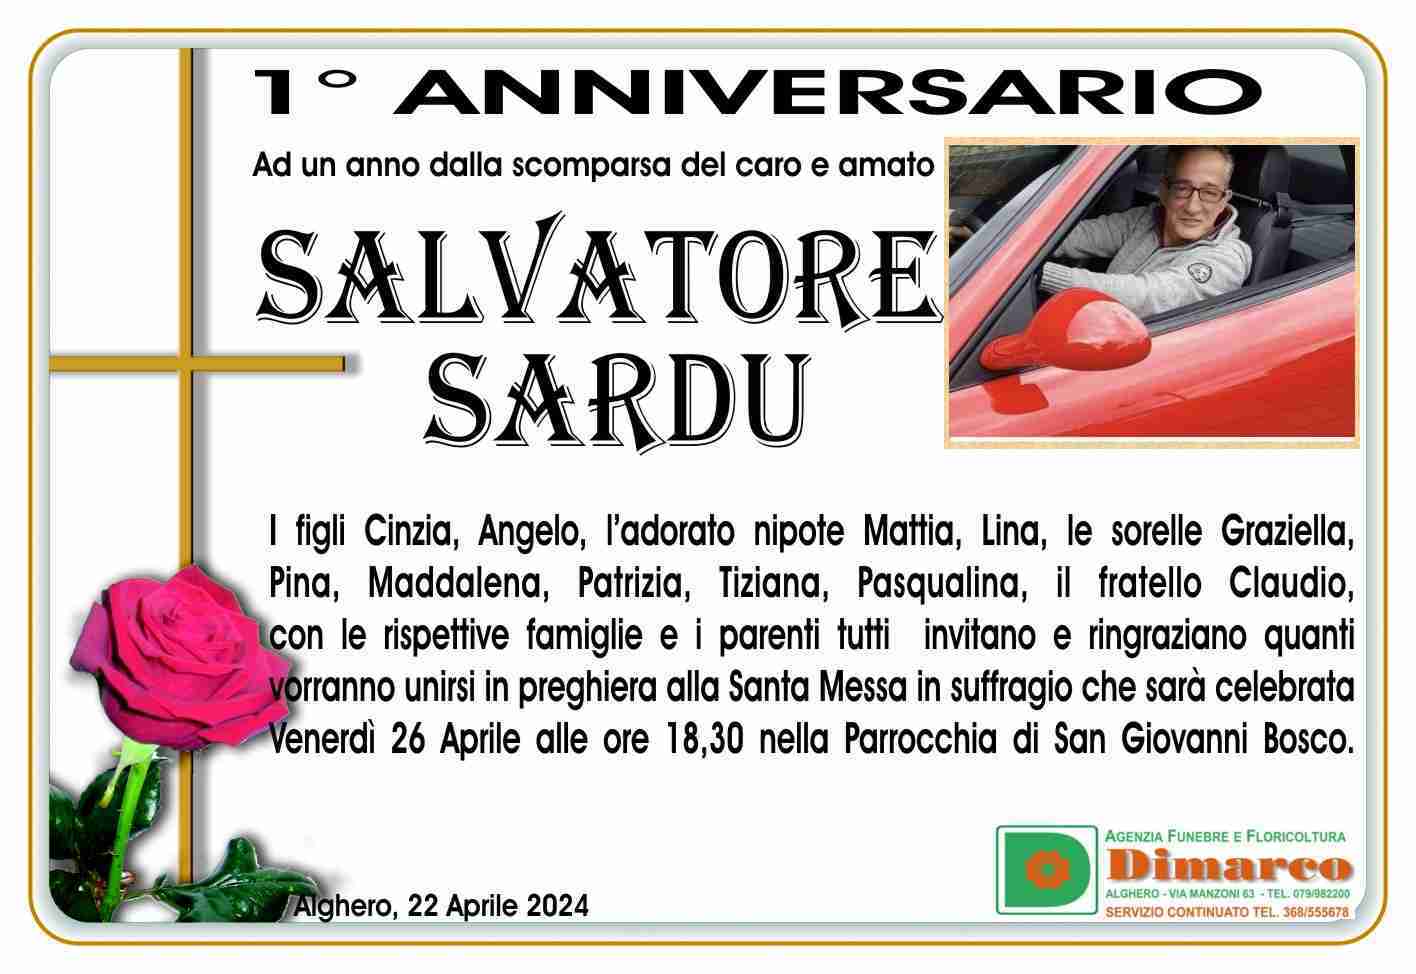 Salvatore Sardu